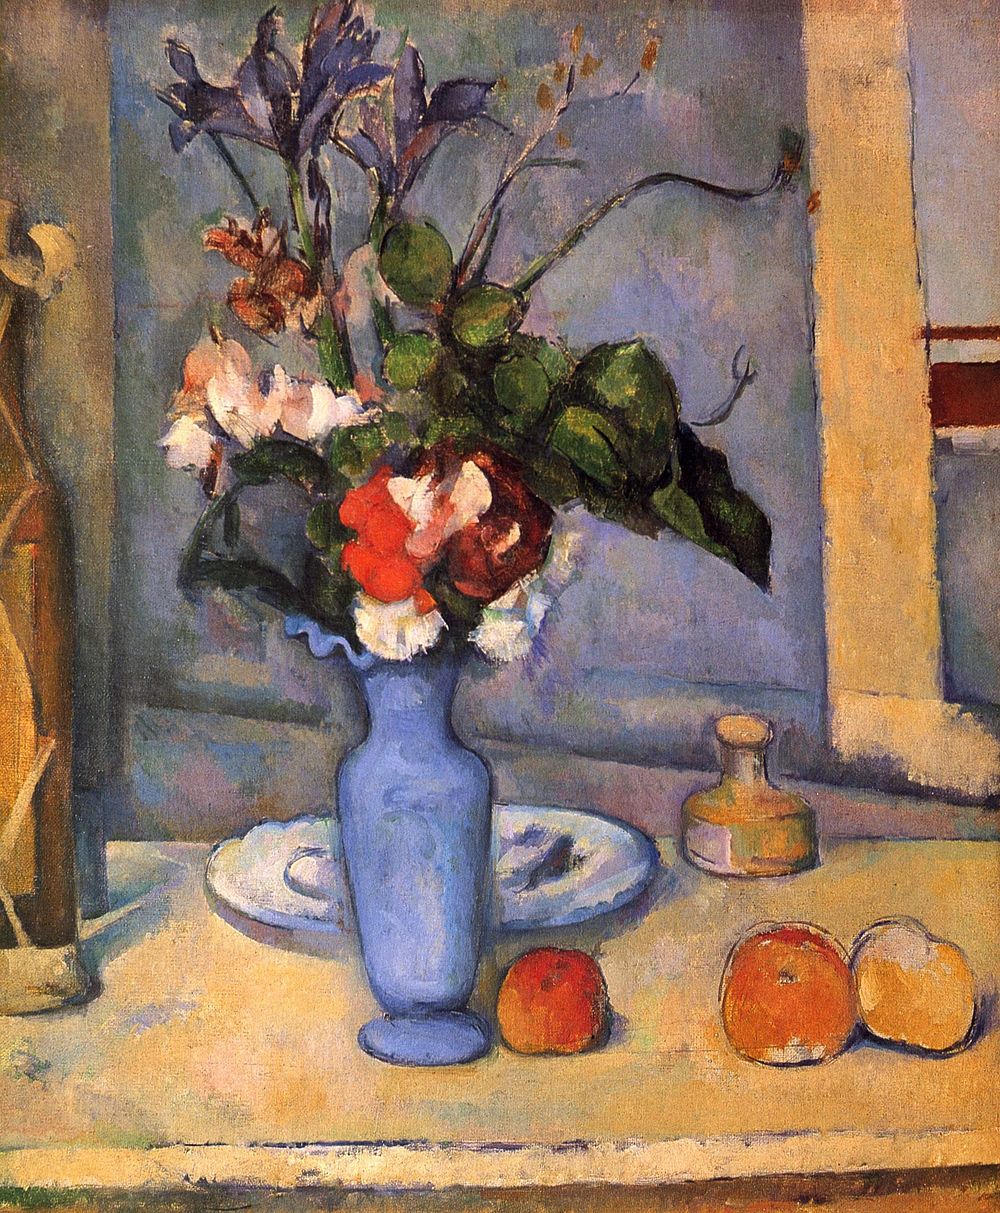 Paul C&eacute;zanne's Le Vase bleu (1885-1887) famous painting. Original from Wikimedia Commons. 